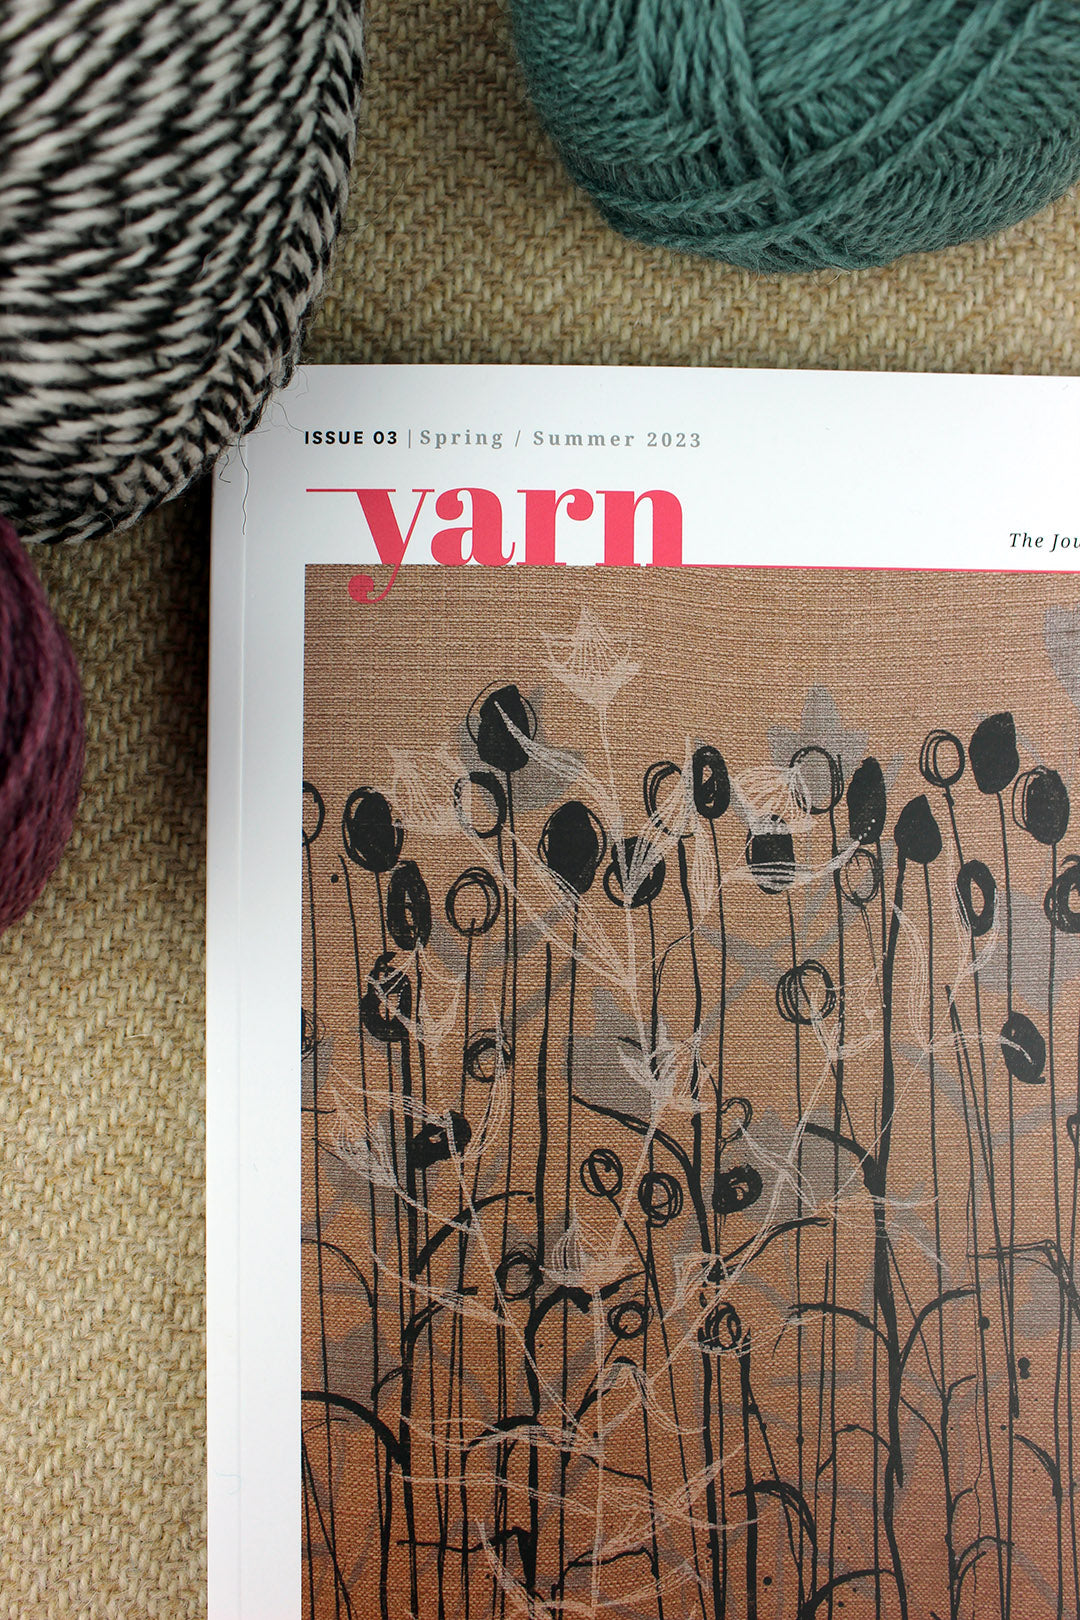 Journal of scottish yarns issue 3 - Scottish textiles showcase